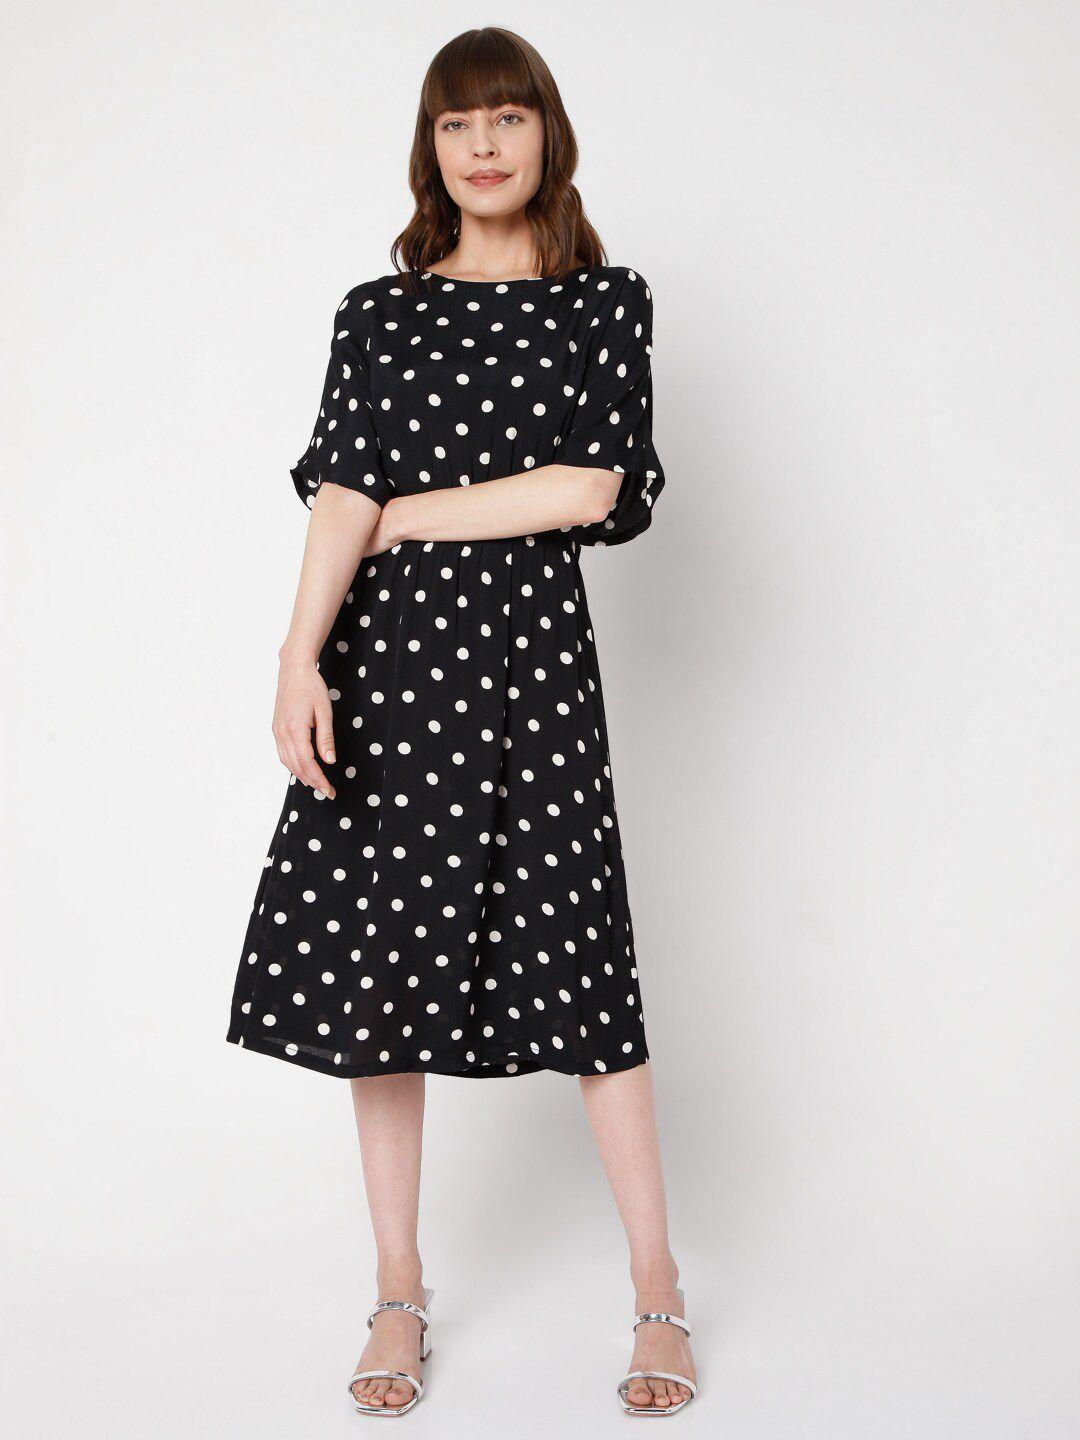 vero moda women black & white polka dots printed a-line dress